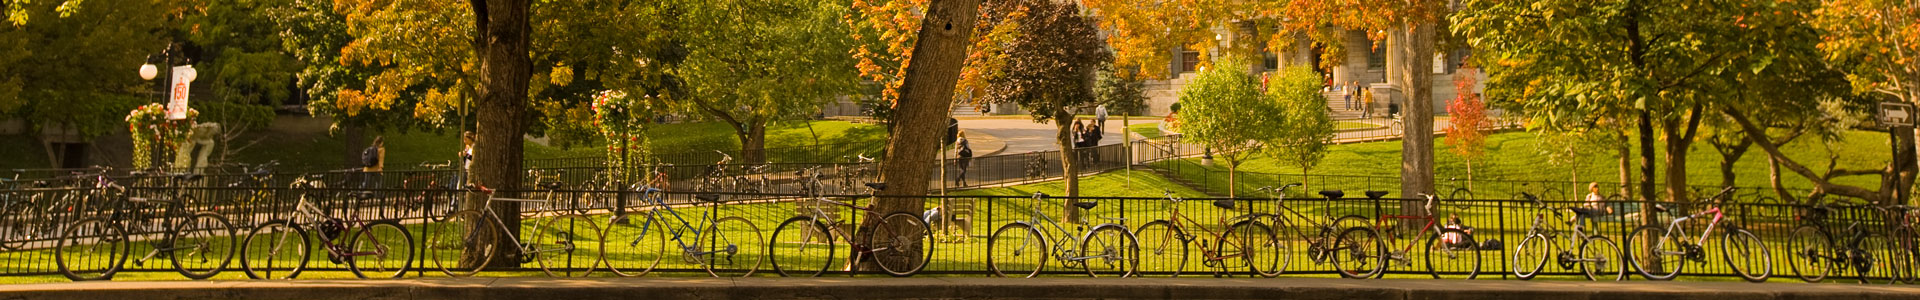 Bikes on lower campus